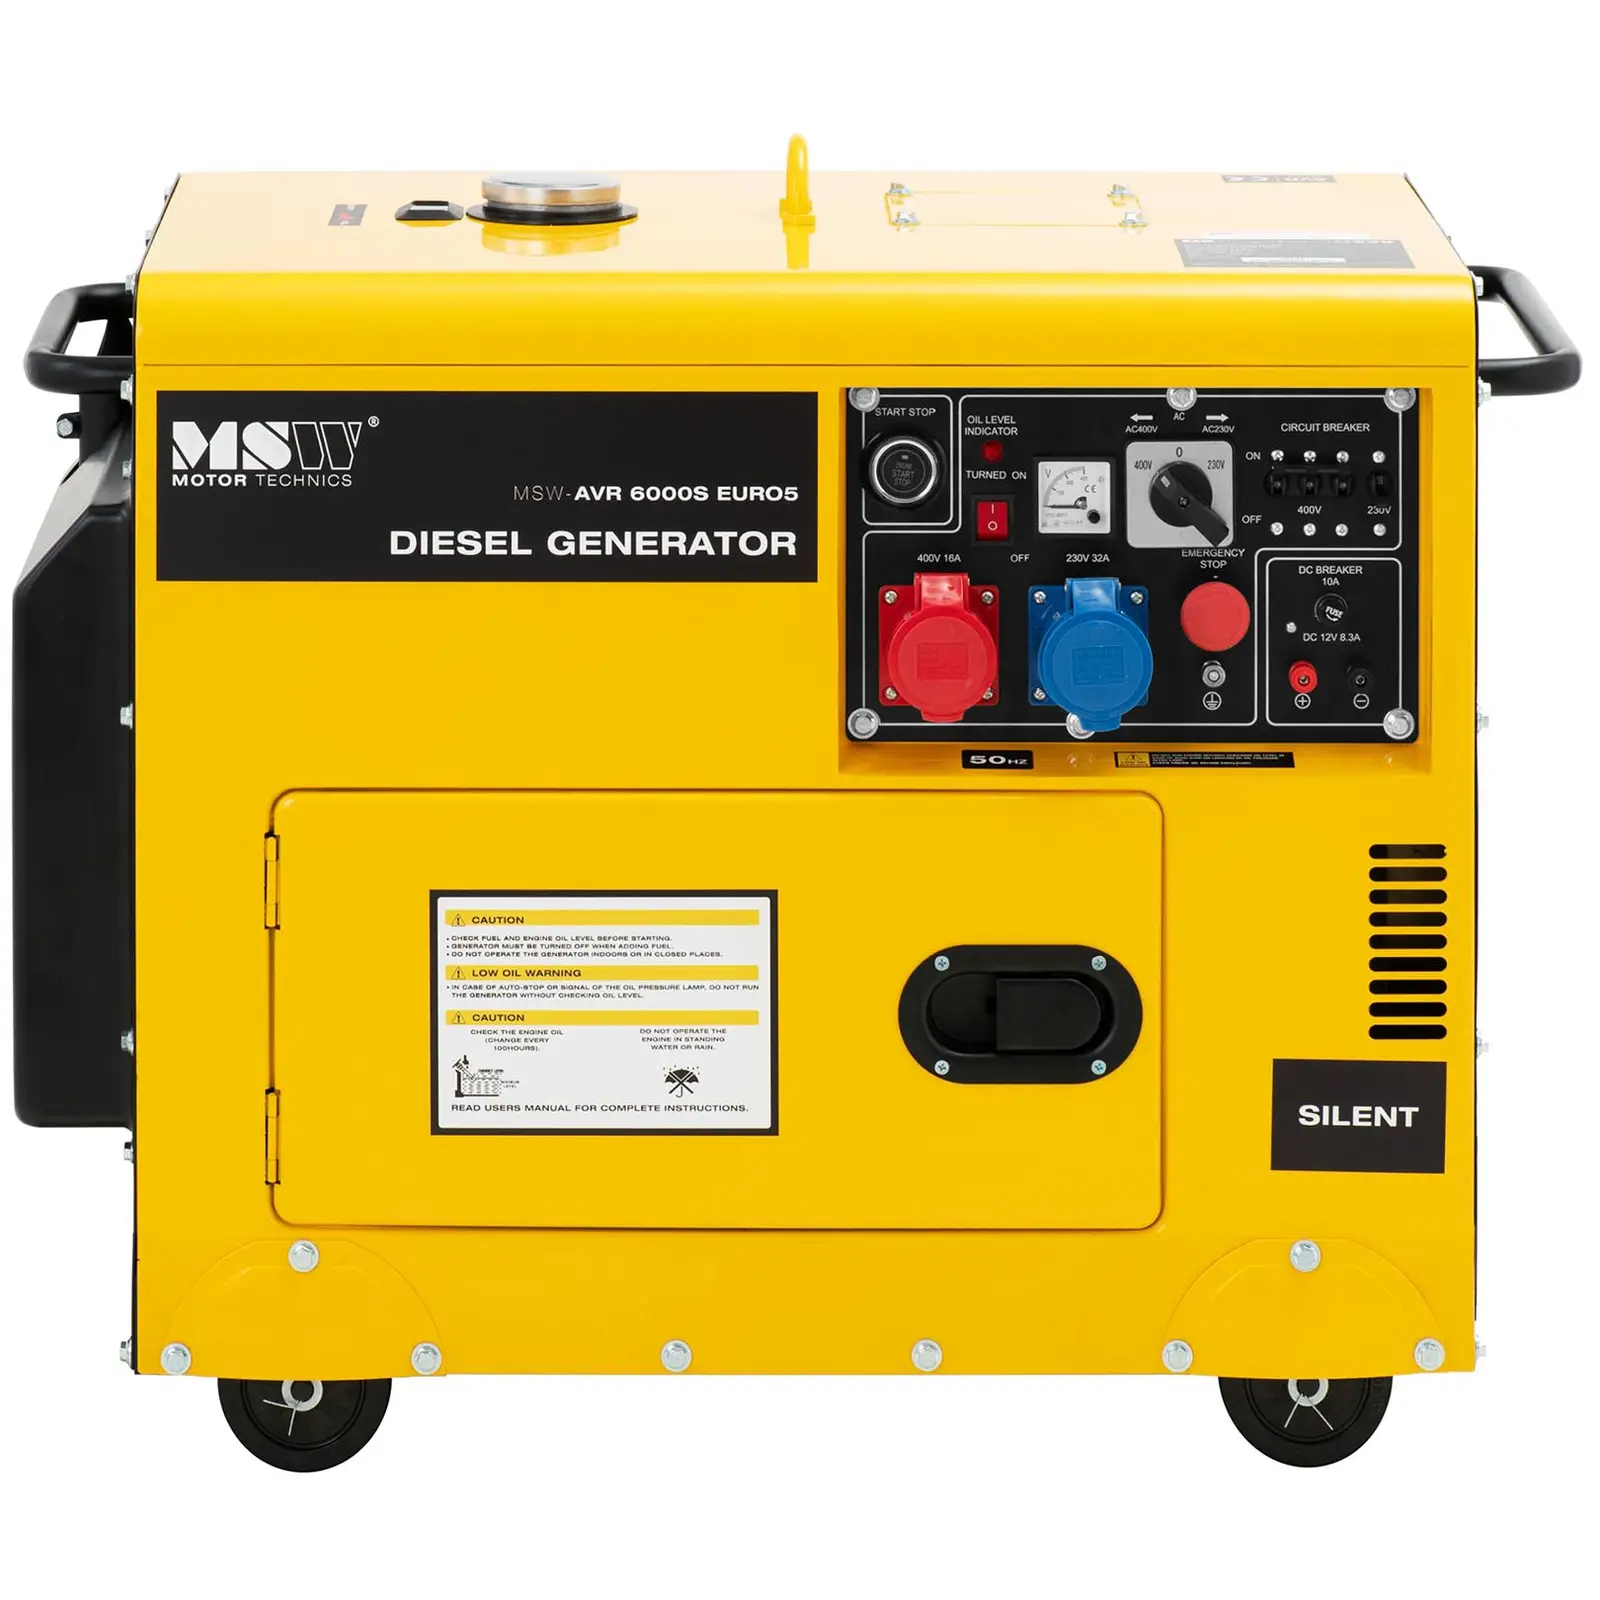 Notstromaggregat Diesel - 5100 / 6000 W - 16 L - 240/400 V - mobil - AVR - Euro 5